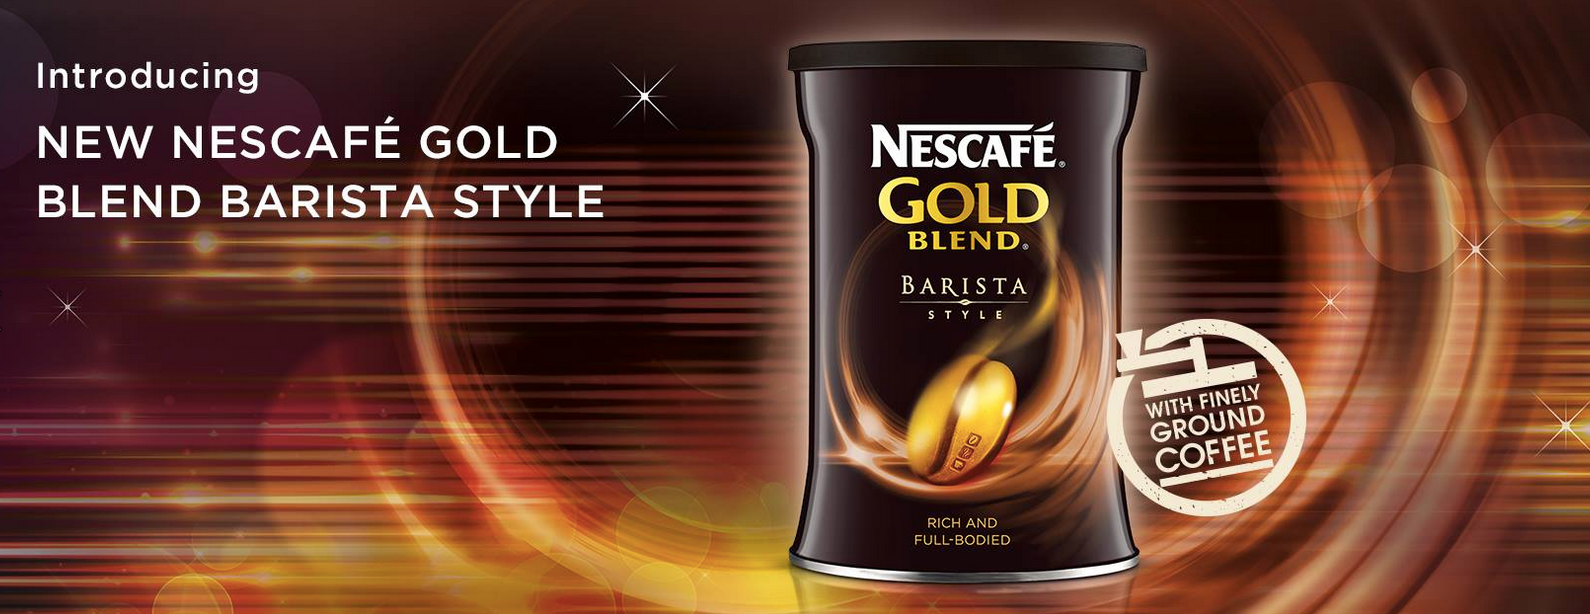 Фан пей голд. Нескафе Нестле кофе. Нескафе Голд. Реклама кофе Нескафе. Nescafe Gold марка.